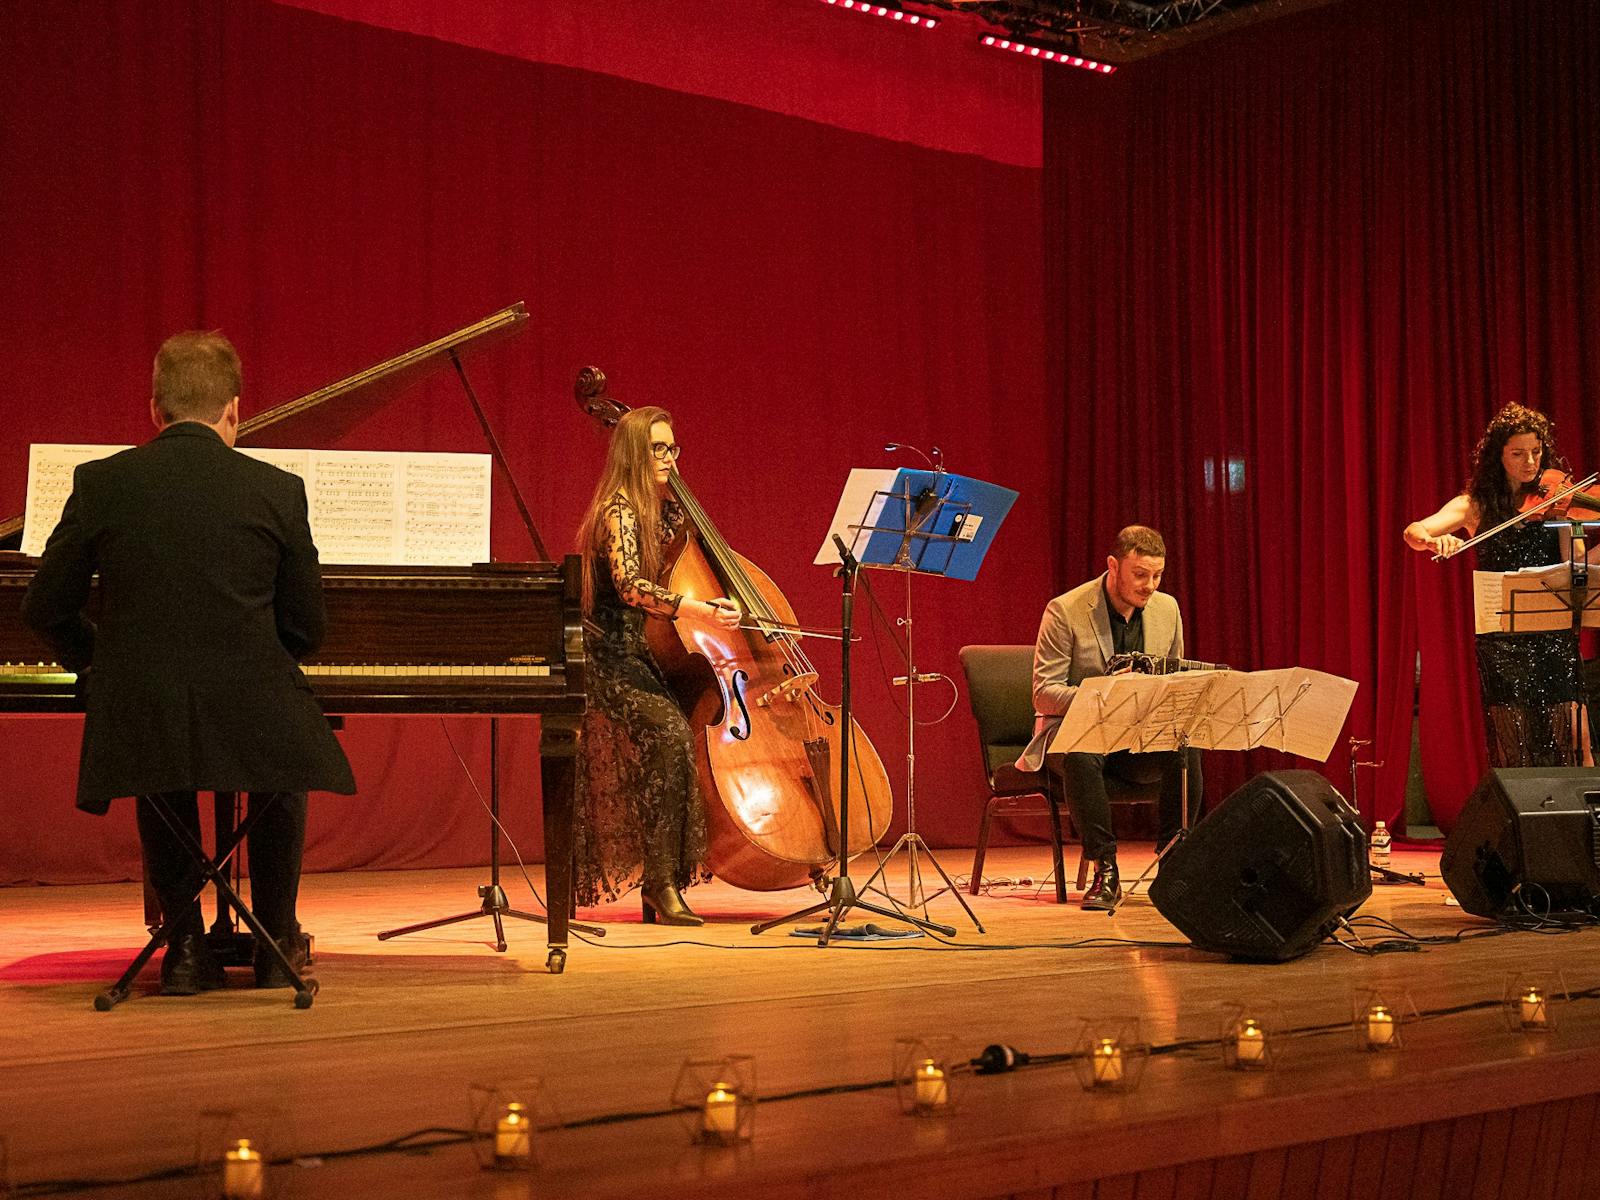 Mendoza Tango Quartet performing on stage